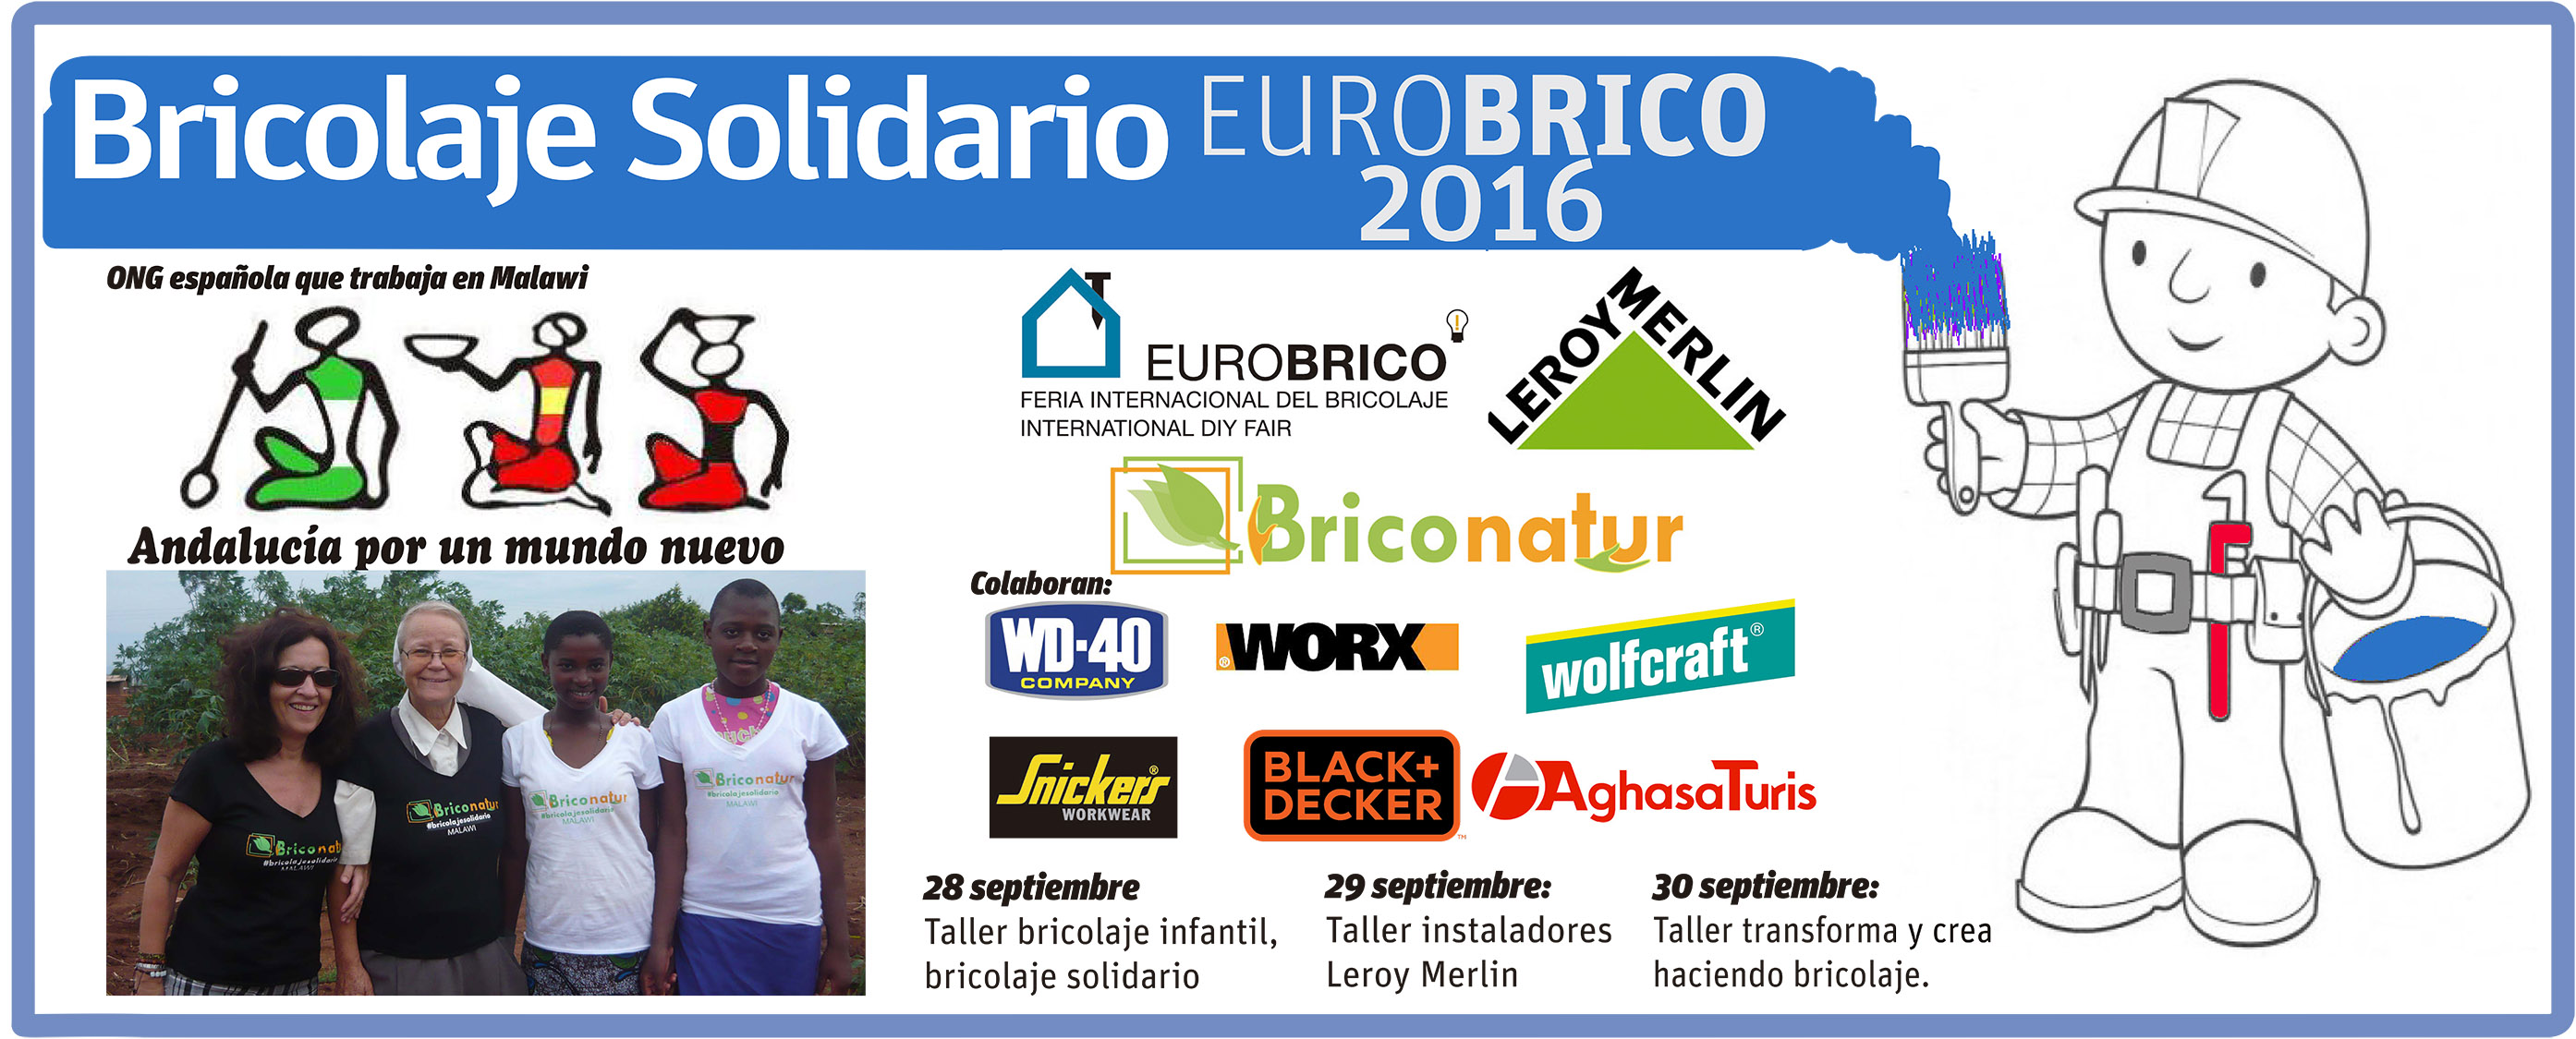 You are currently viewing Bricolaje solidario y talleres para instaladores, in the programme of activities of Eurobrico